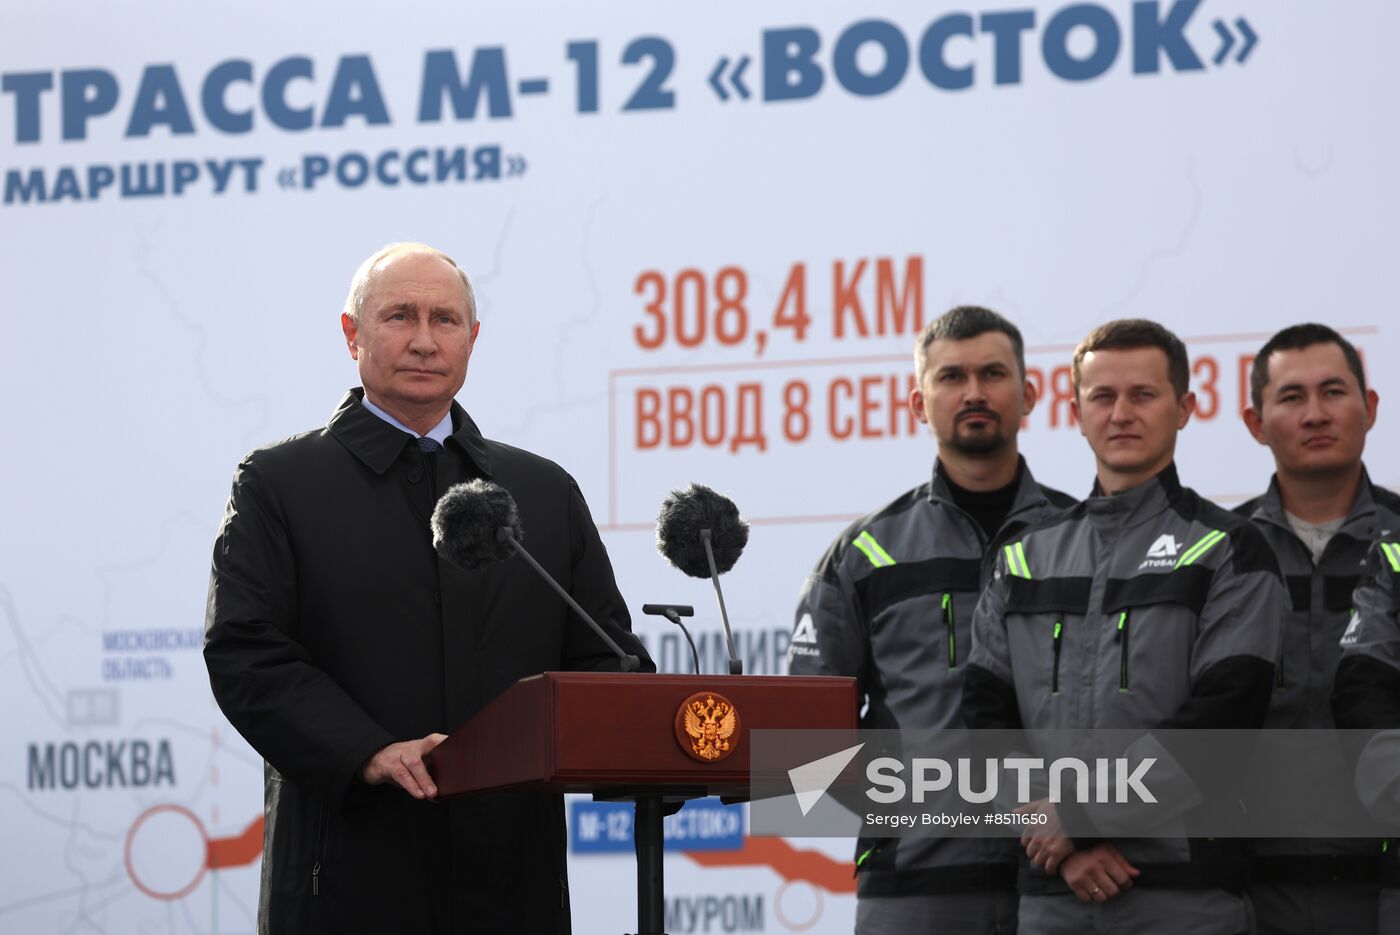 Russia Putin Vostok M-12 Motorway